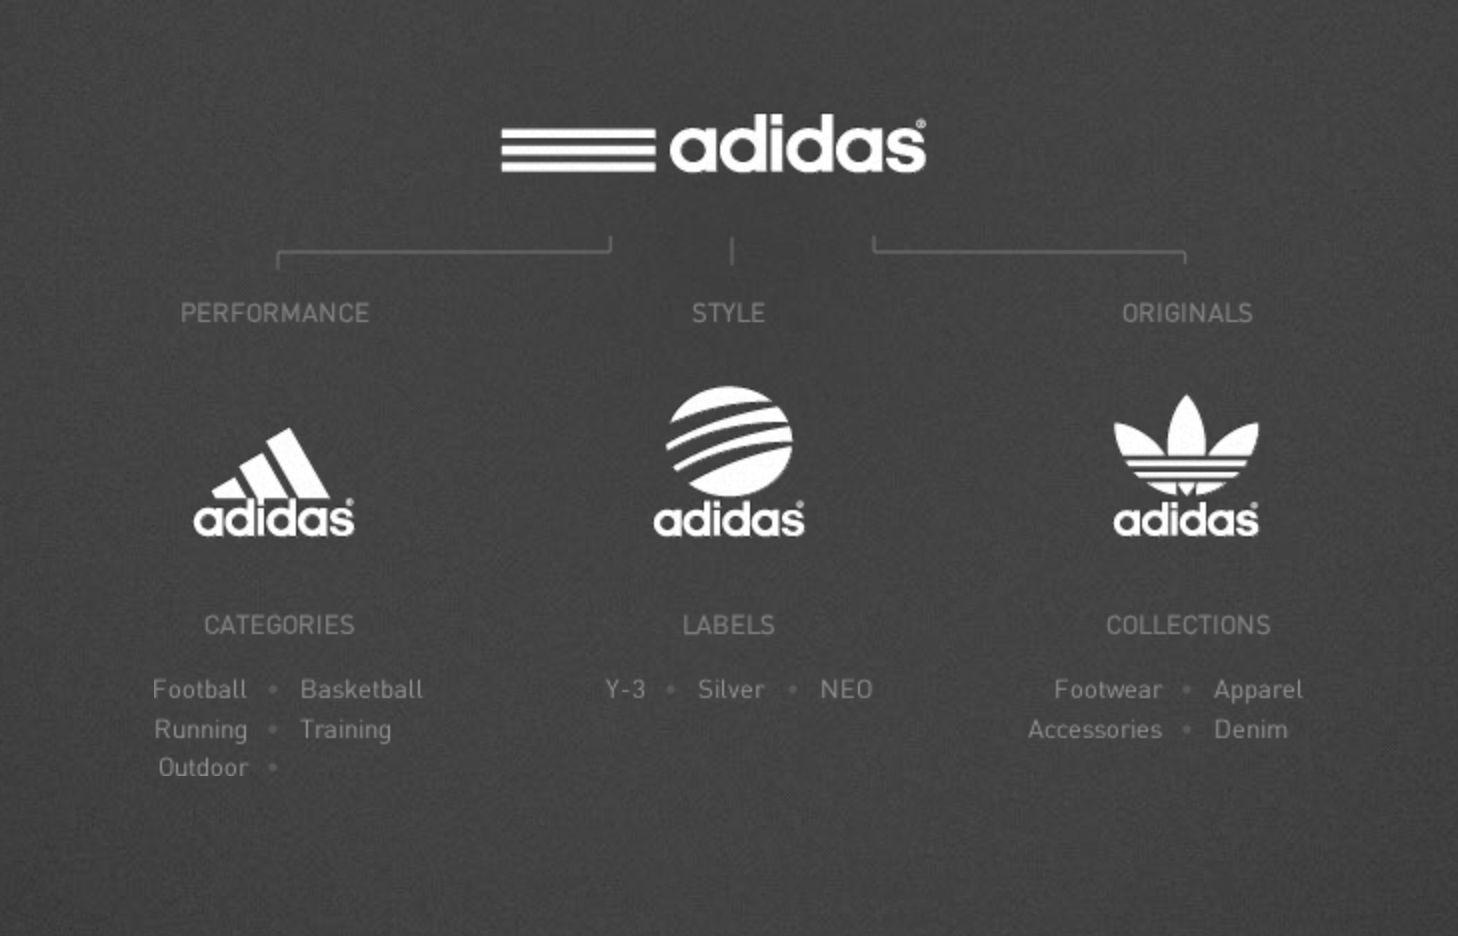 Sick Adidas Logo - Adidas Brand Design Study on Behance